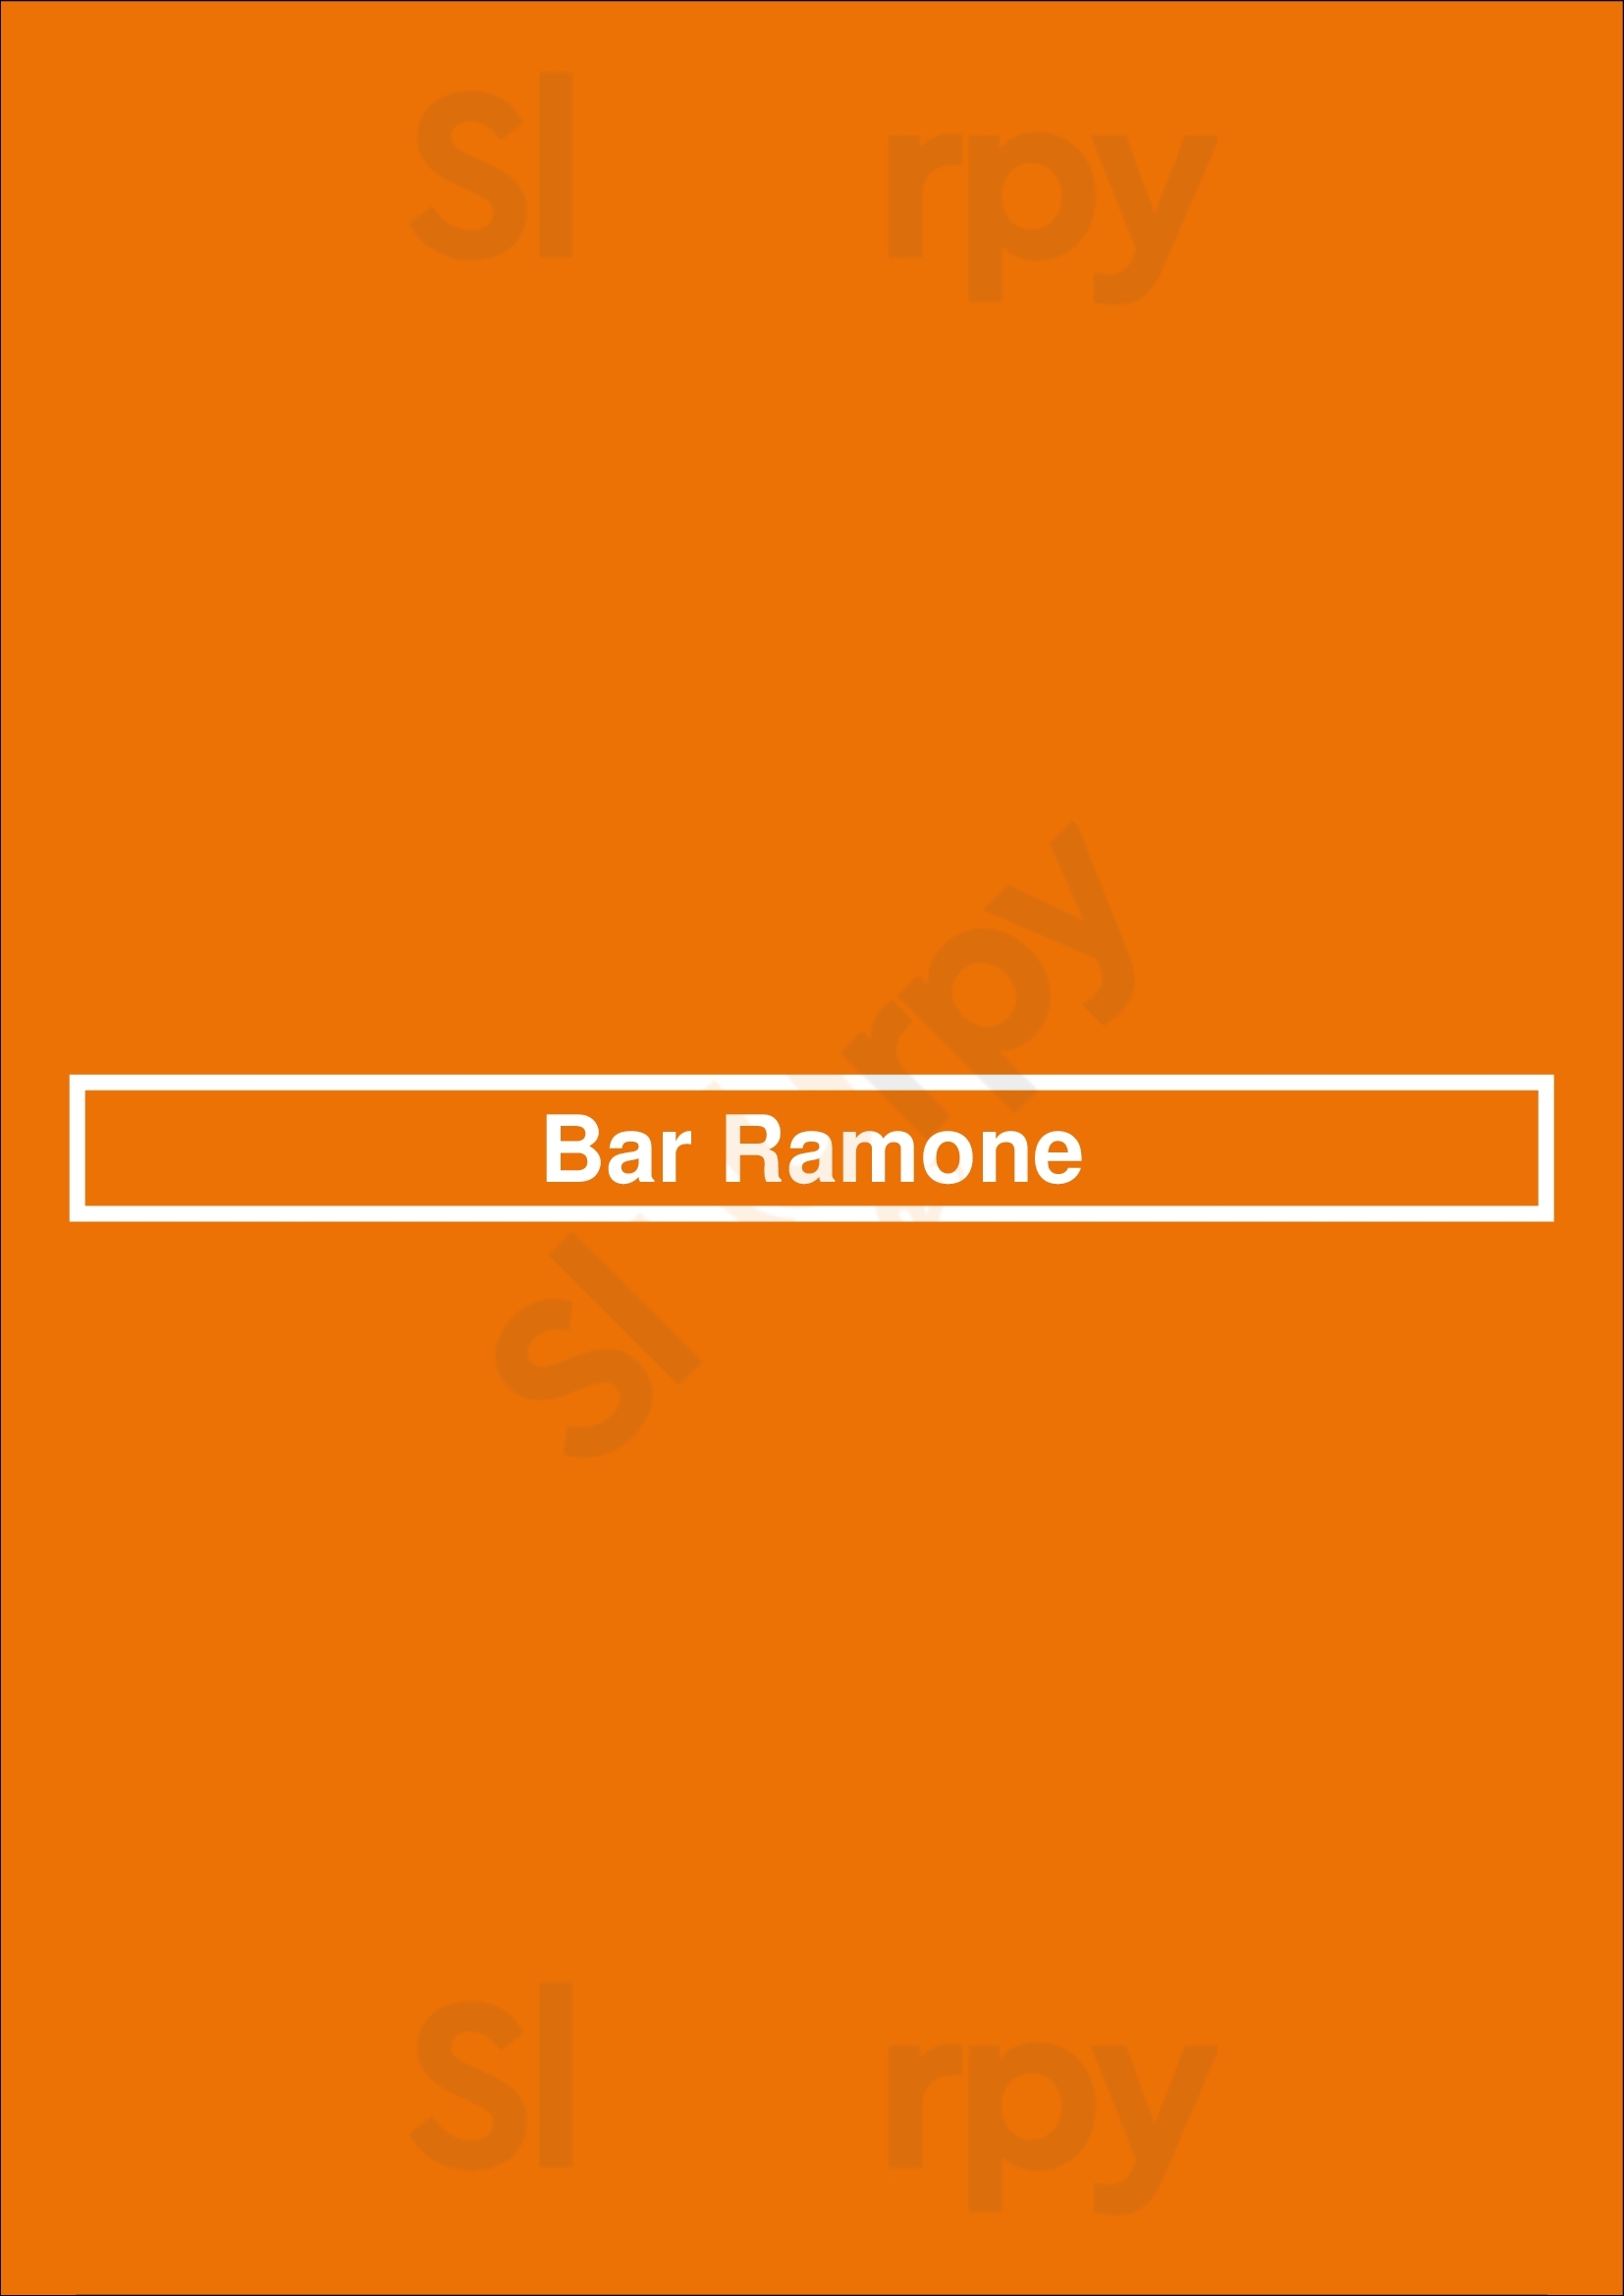 Bar Ramone Chicago Menu - 1